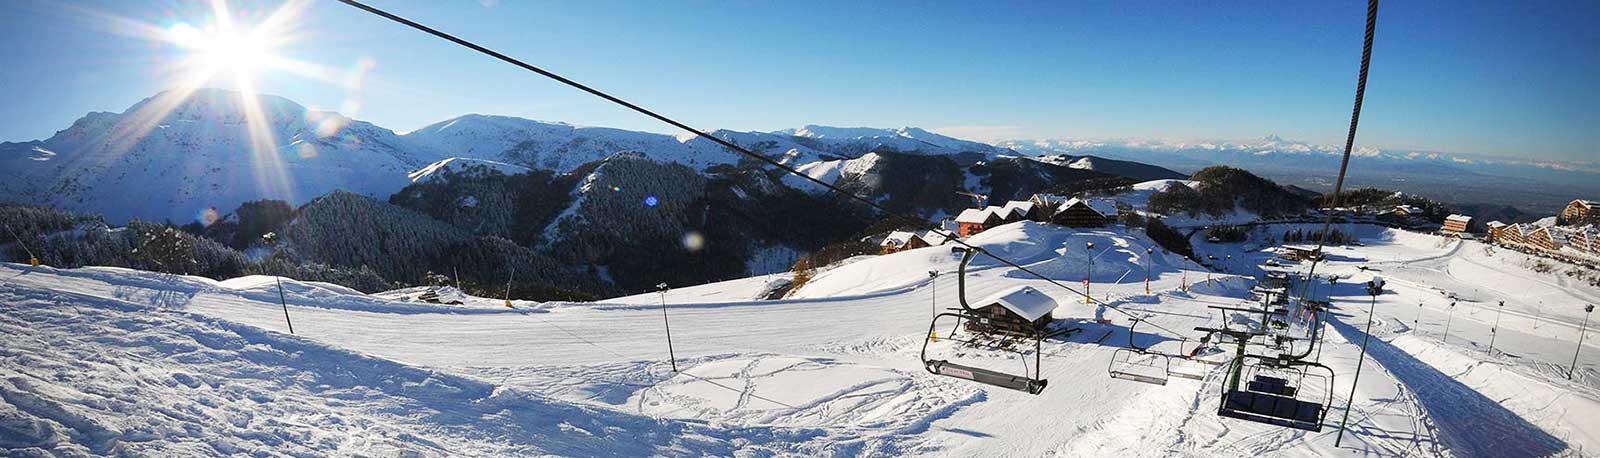 Prato Nevosa School Ski Trips